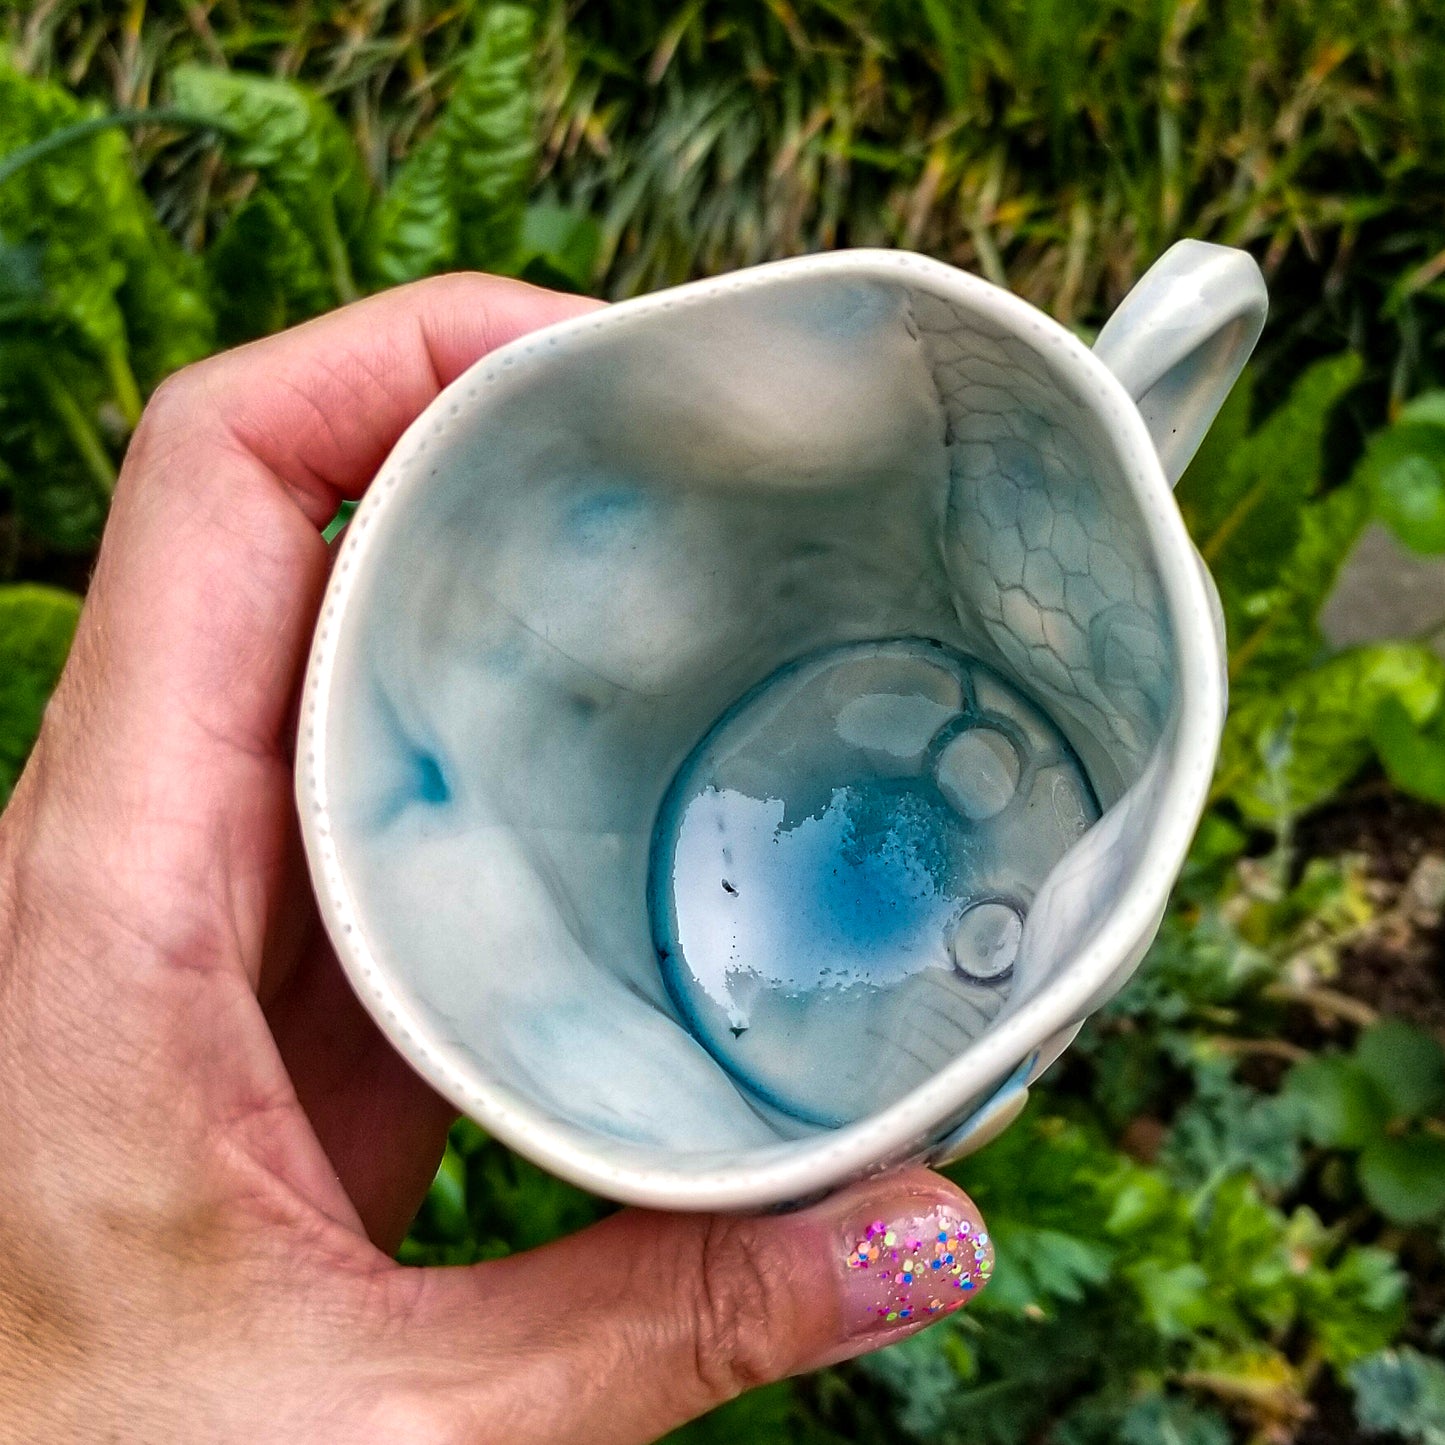 Inside detail of handmade stoneware ceramic mug blue color with pressed textures